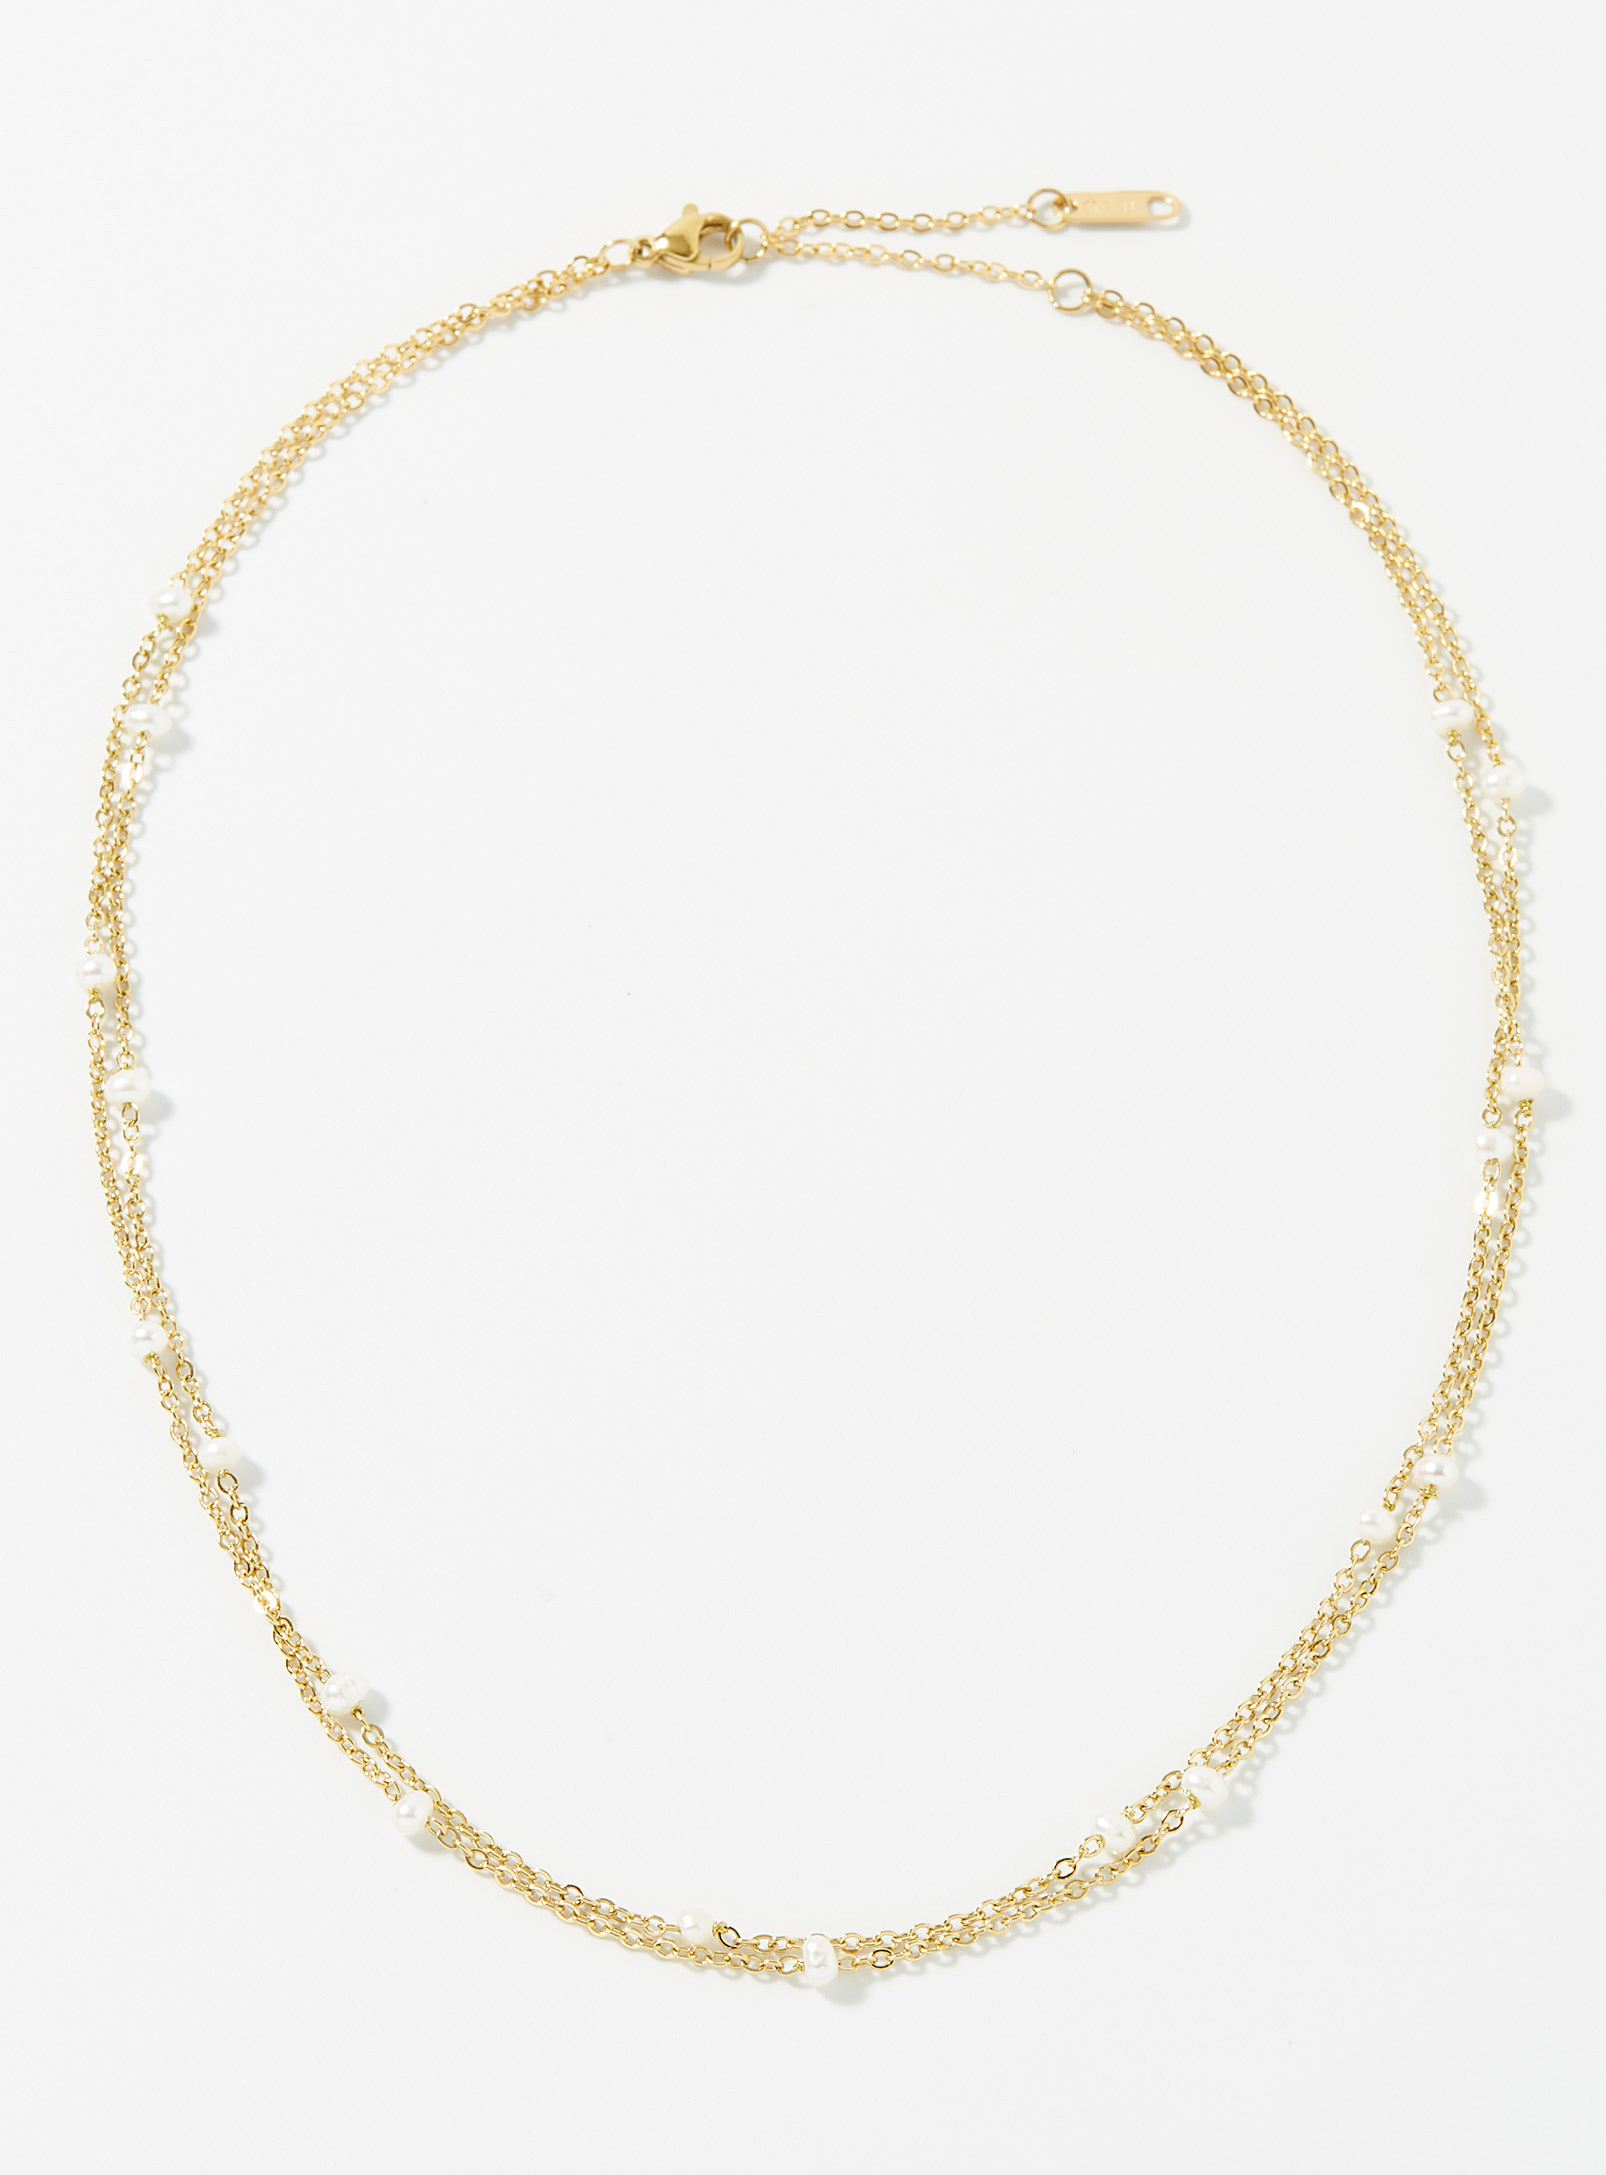 Simons - Women's Pearly bead double chain